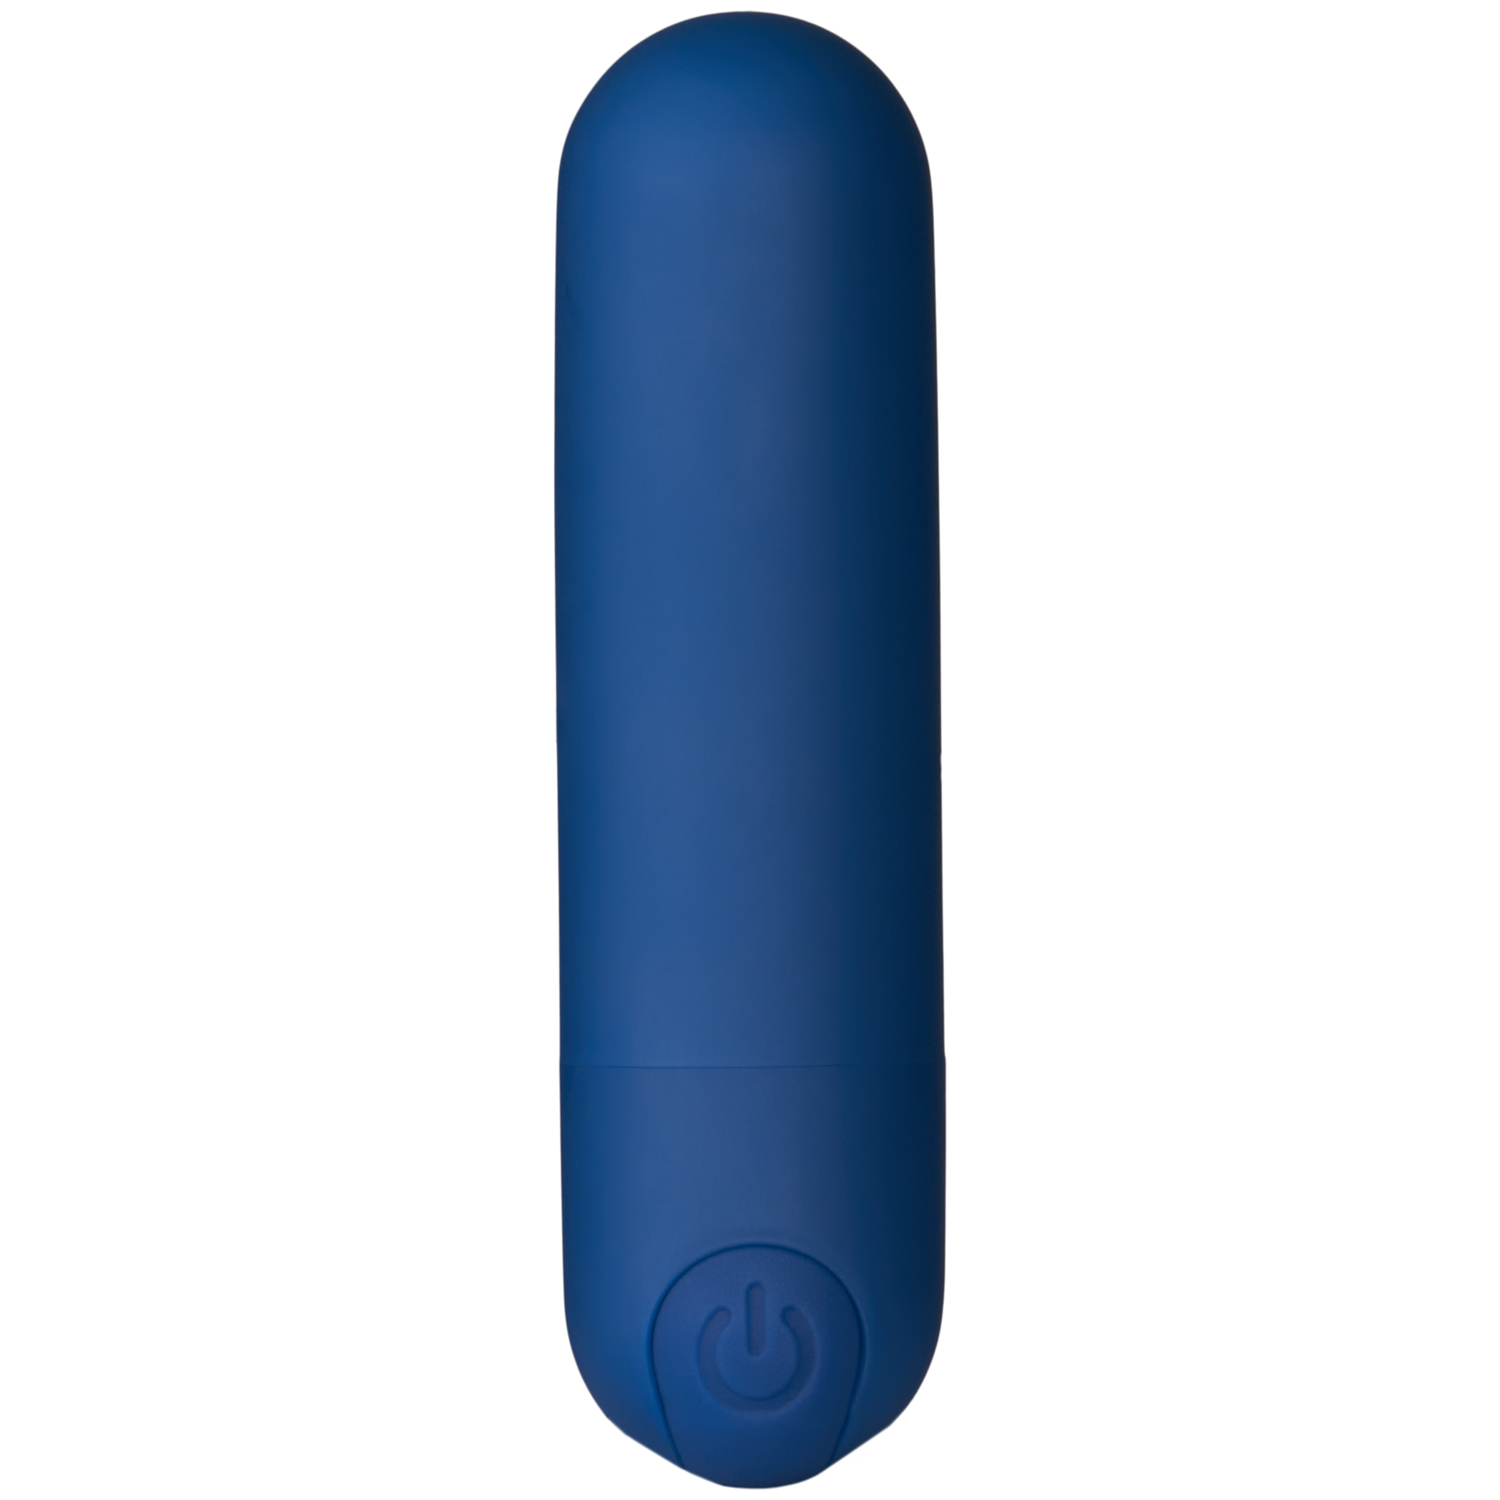 Sinful Business Blue Opladelig Power Bullet Vibrator - Blue